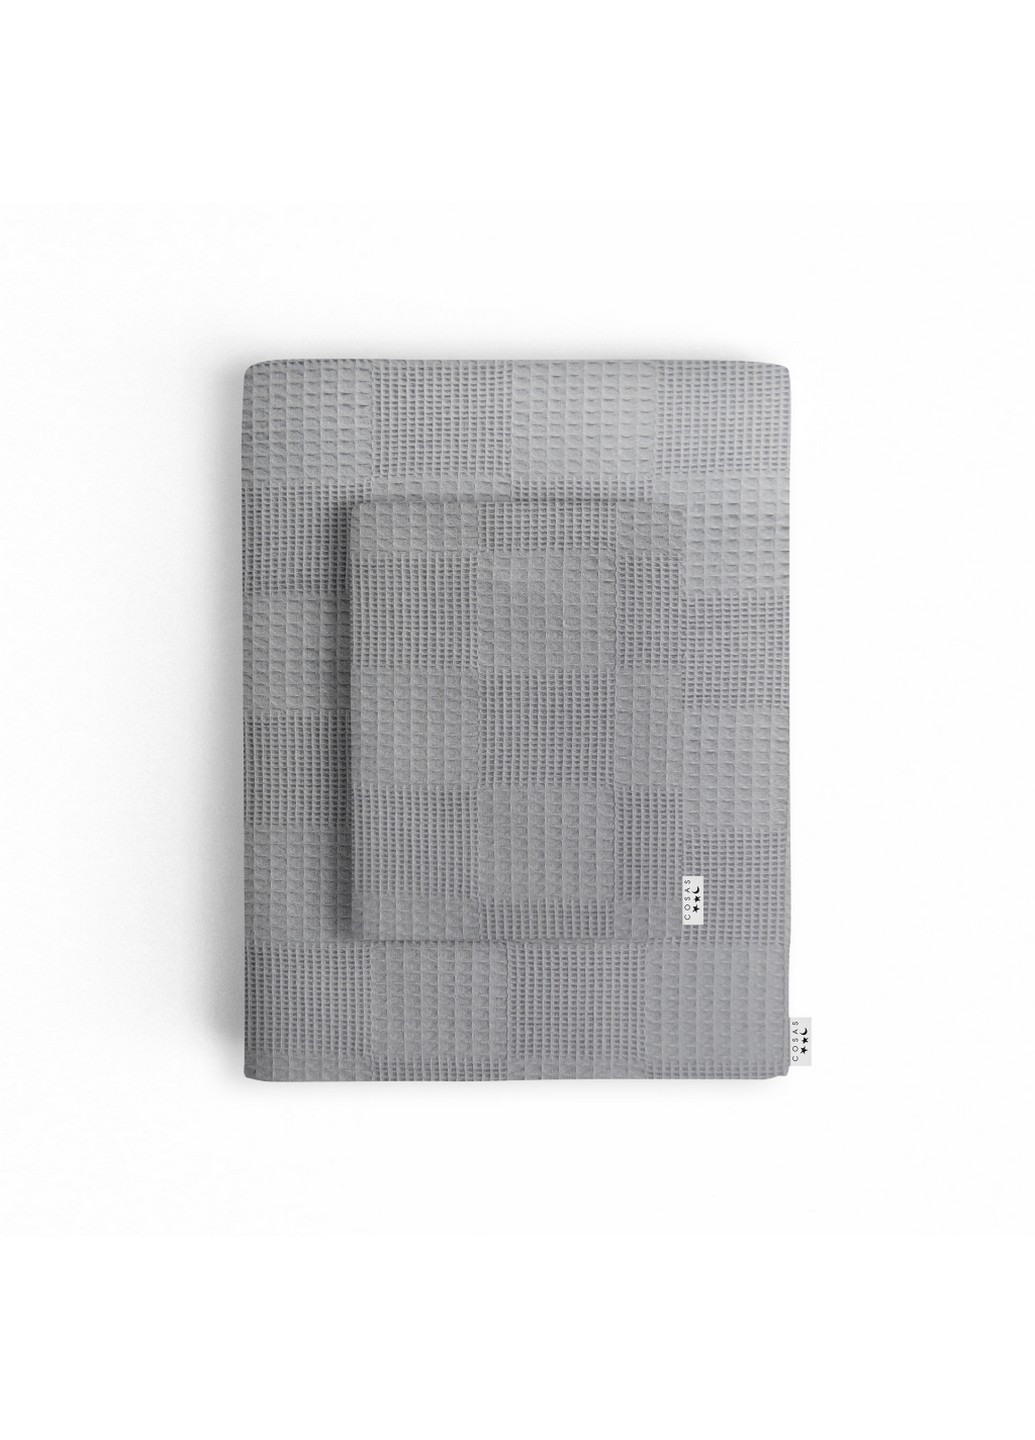 Cosas набор полотенец cube grey (75х95 см - 1 шт и 75х130 см - 1 шт) однотонный серый производство - Украина